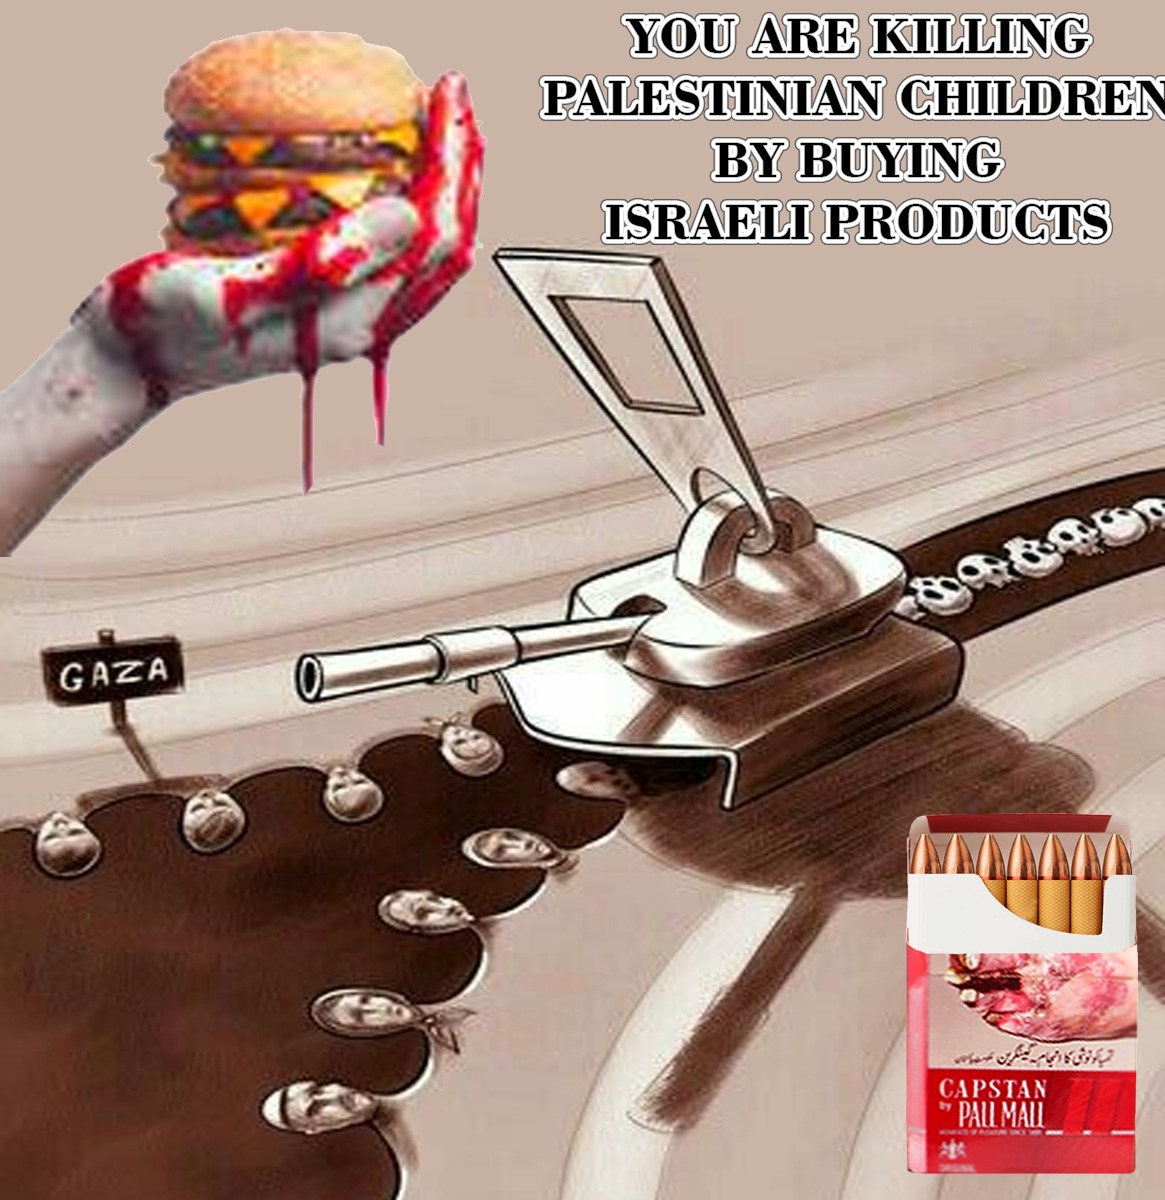 U r killing Palestinian children by buying Israeli products !
#فری_فلسطین